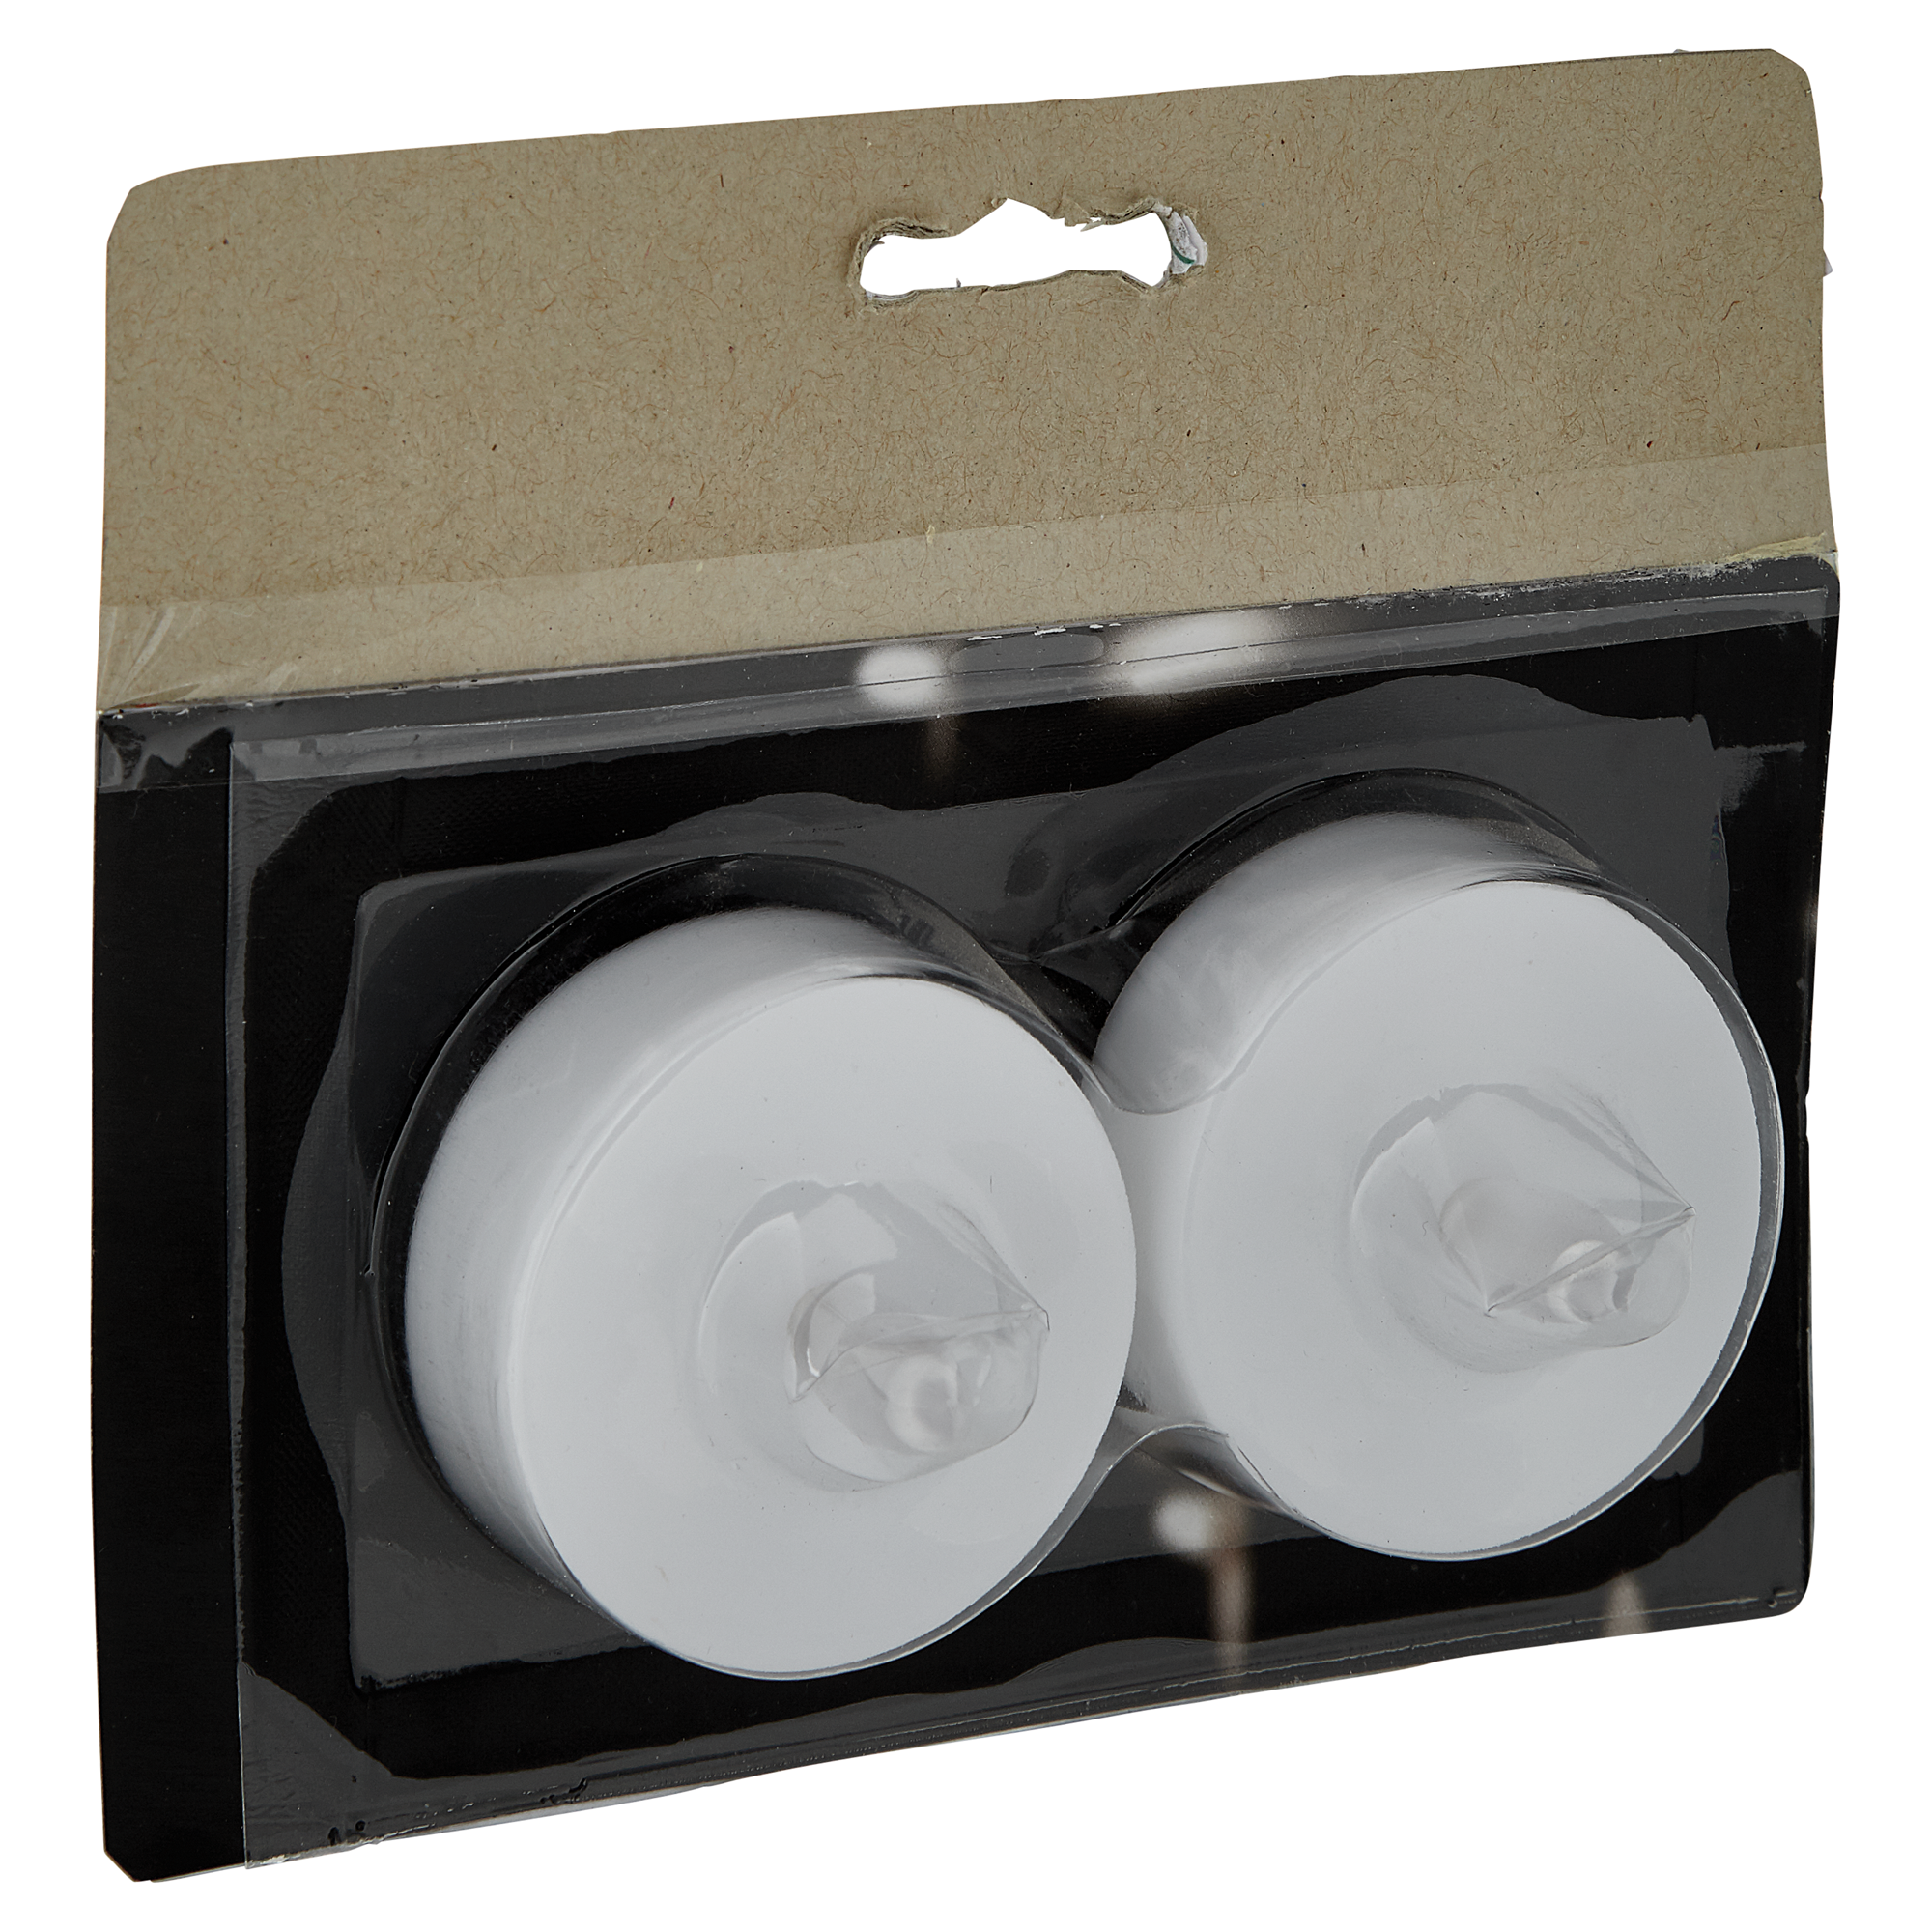 LED-Maxi-Teelichter cremefarben 2 Stück + product picture